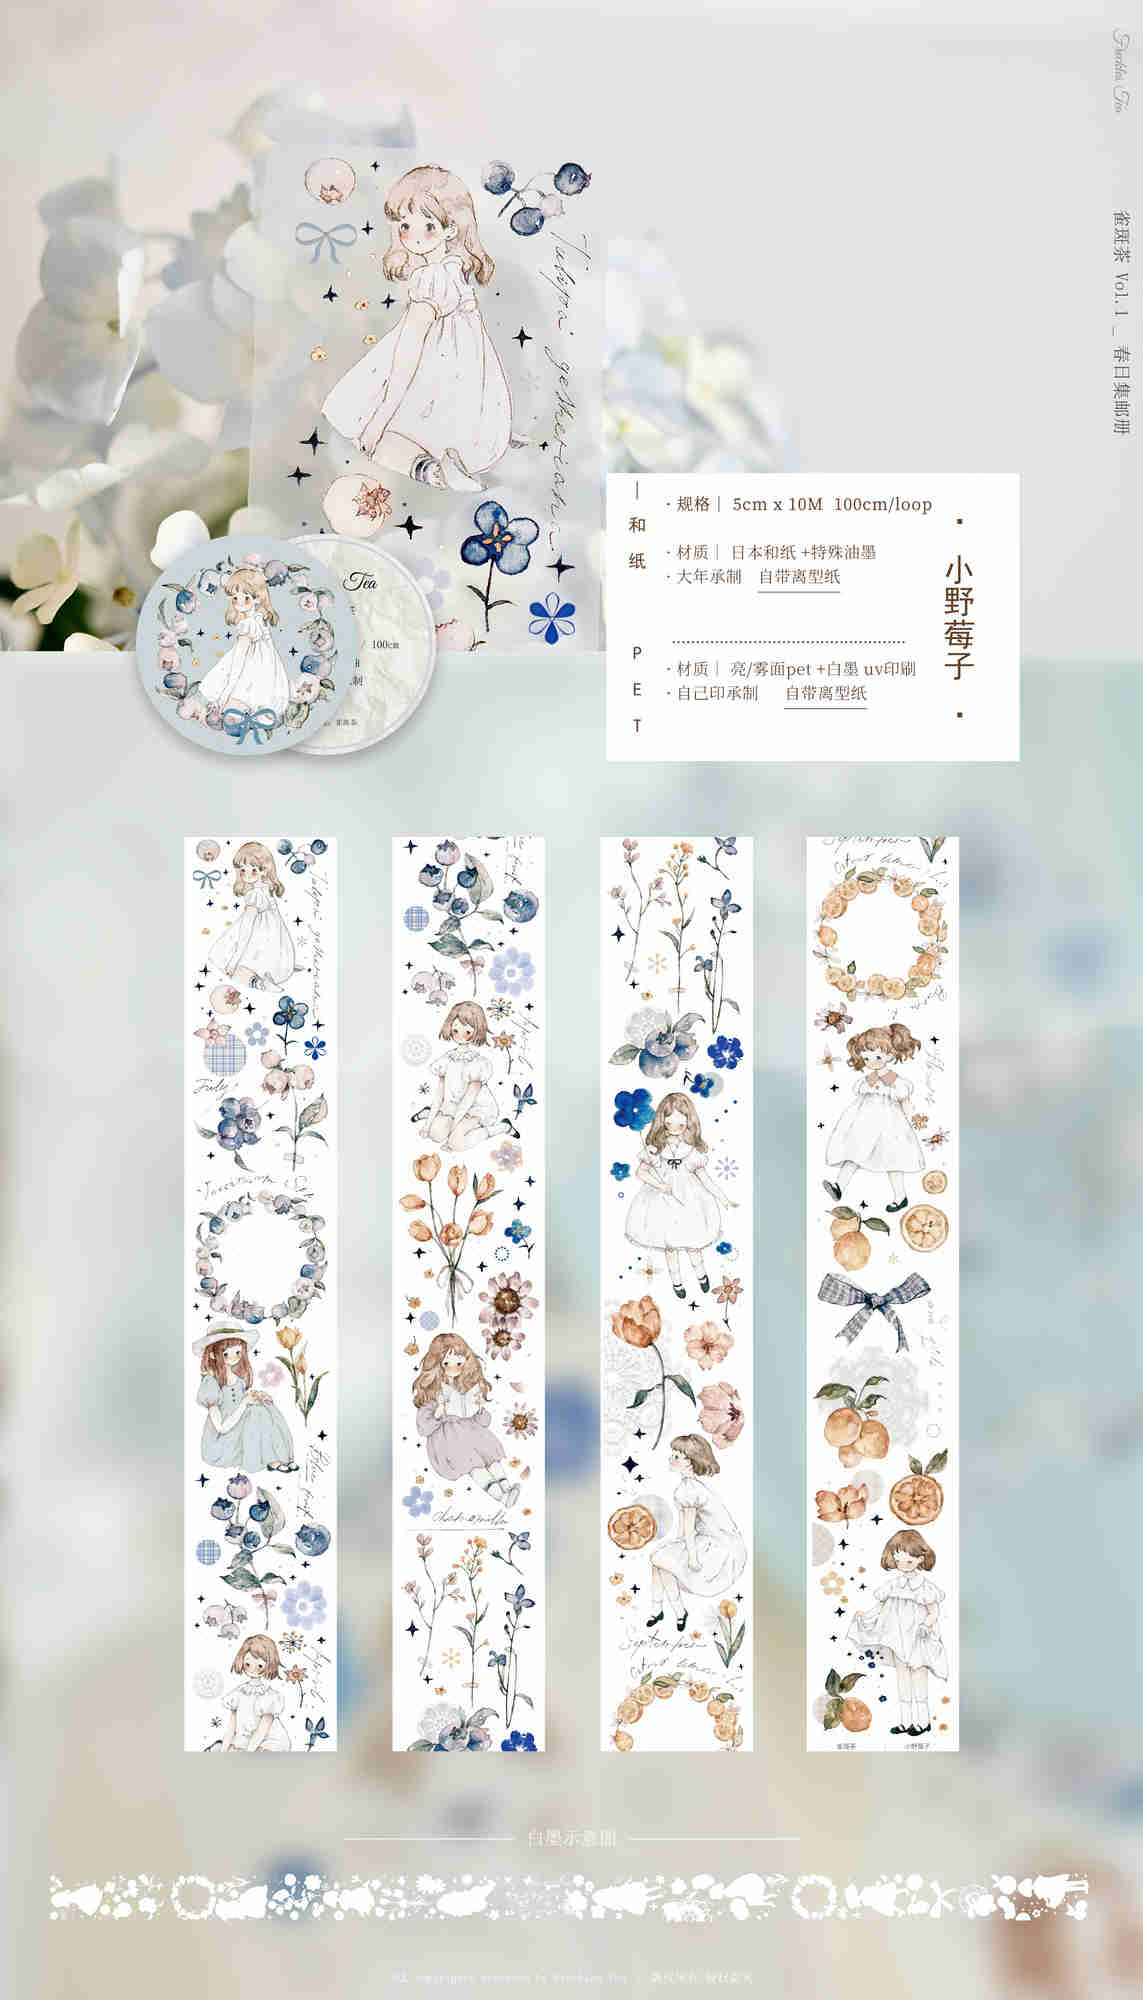 10 Meter Roll Freckle Tea PET Tape Ono Journal Dia..